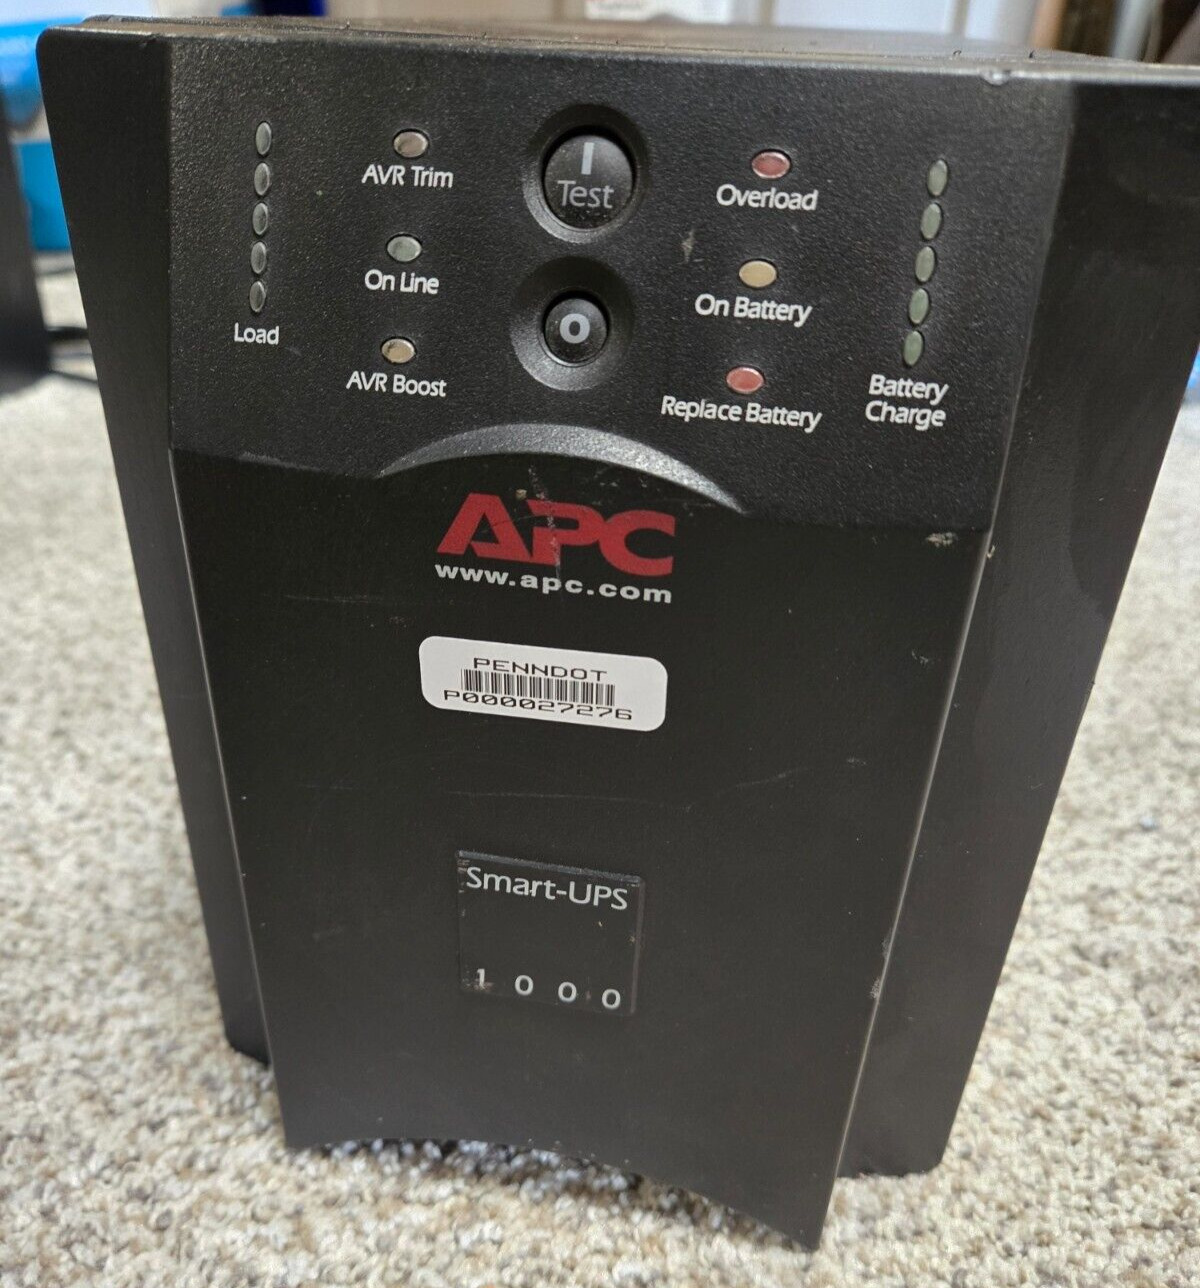 SUA1000 APC Smart-UPS 1000VA 670W 120V Power Backup UPS ~ No Battery